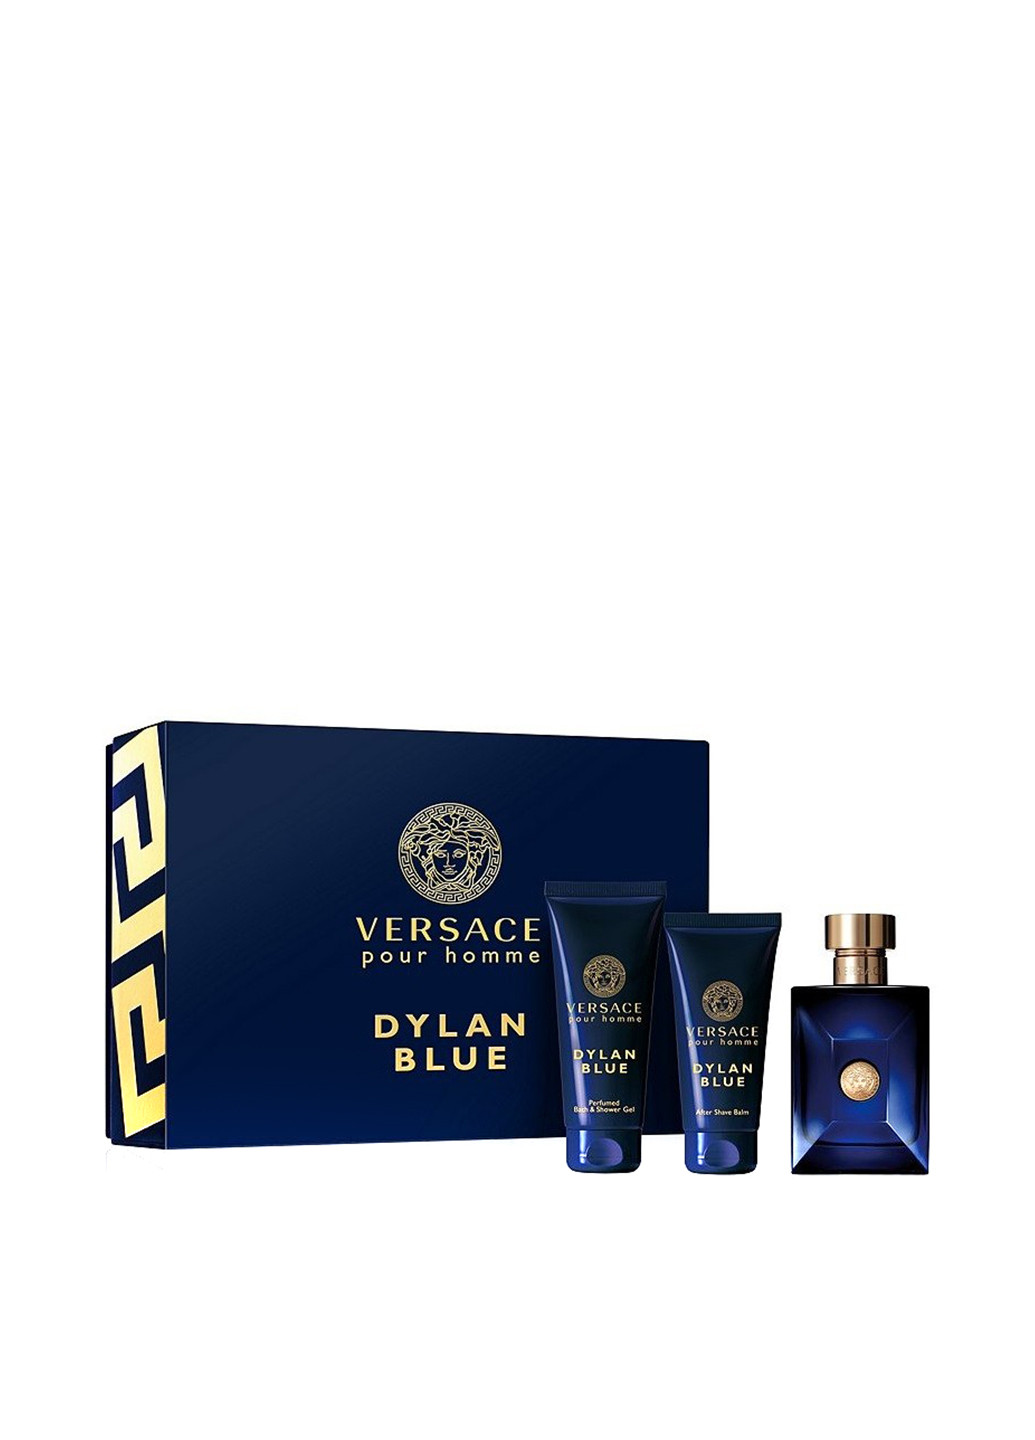 Набор, " pour homme dylan blue mini set", (5 мл, 25 г., 25 г.) Versace